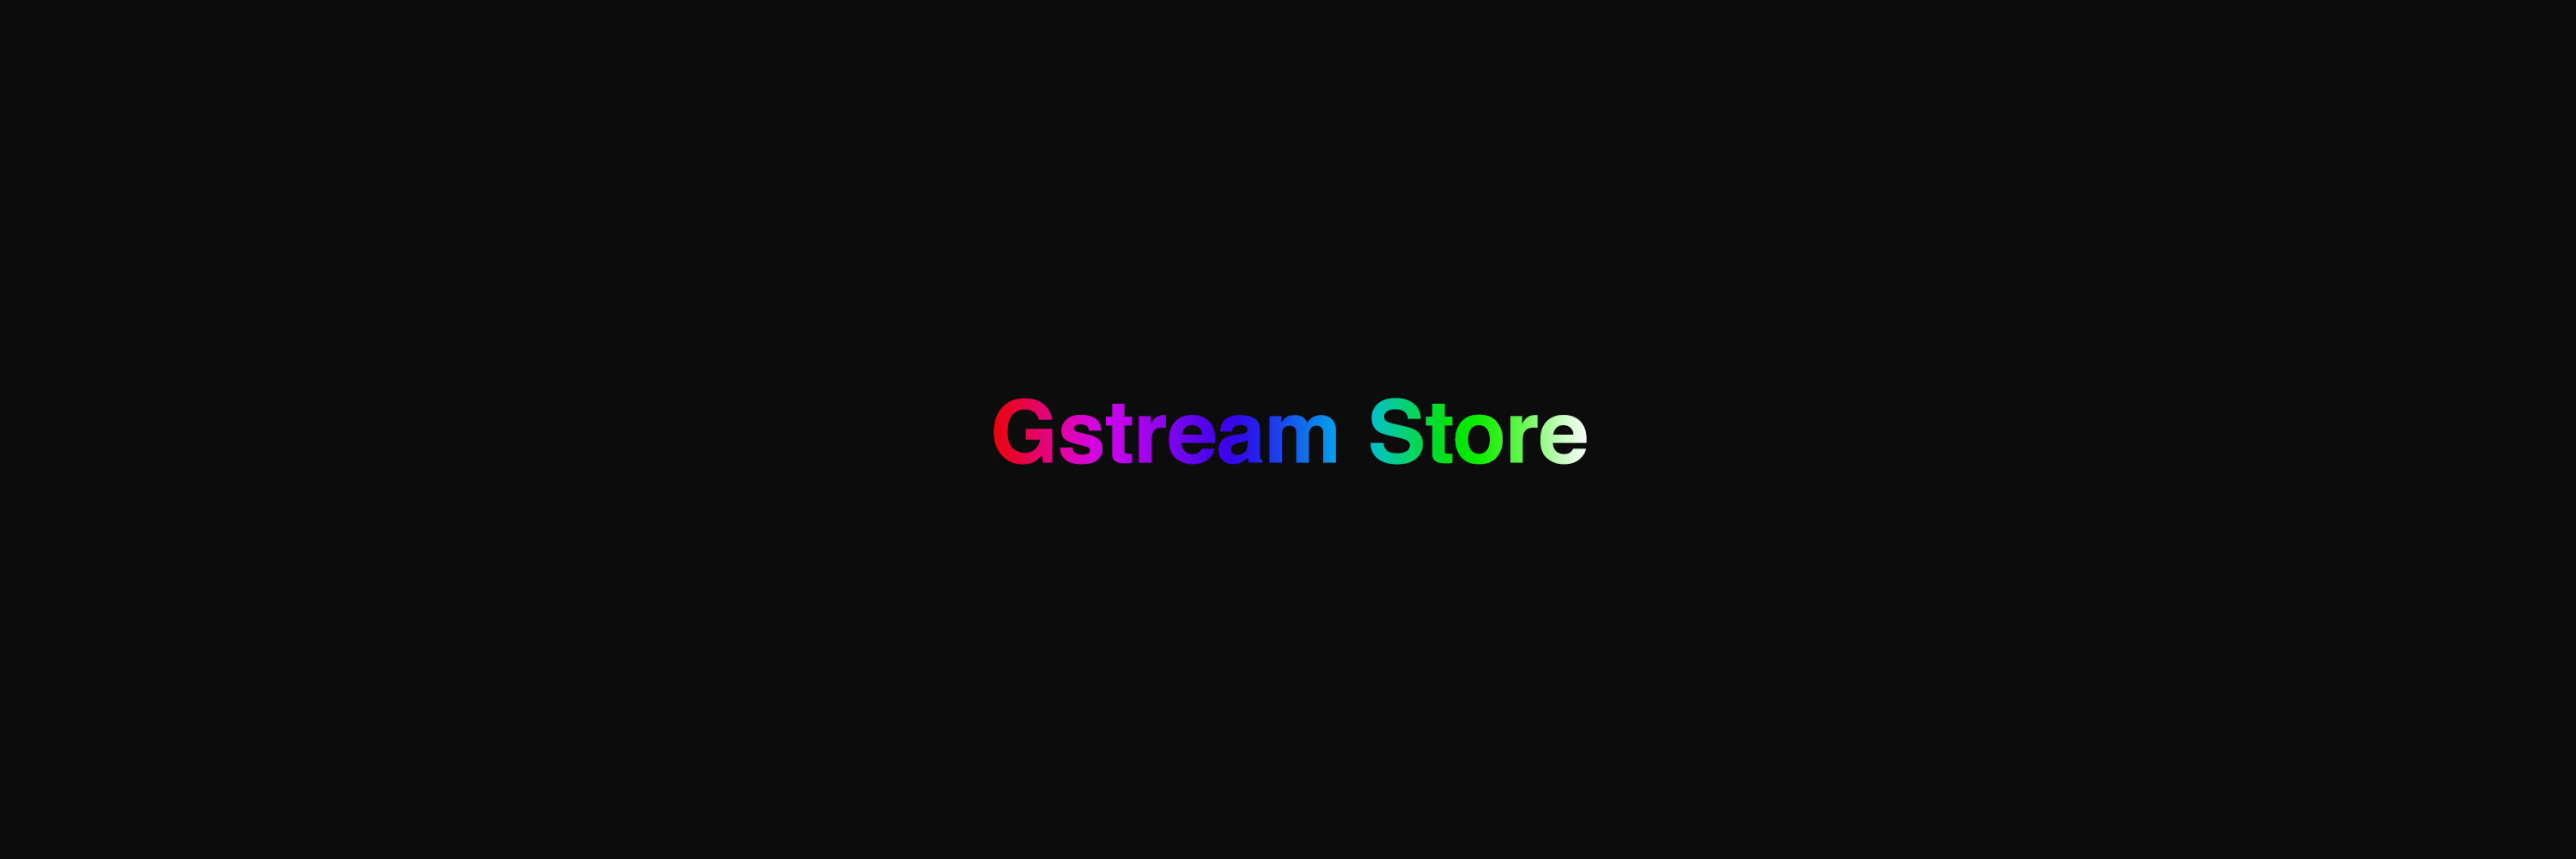 Gstream Store